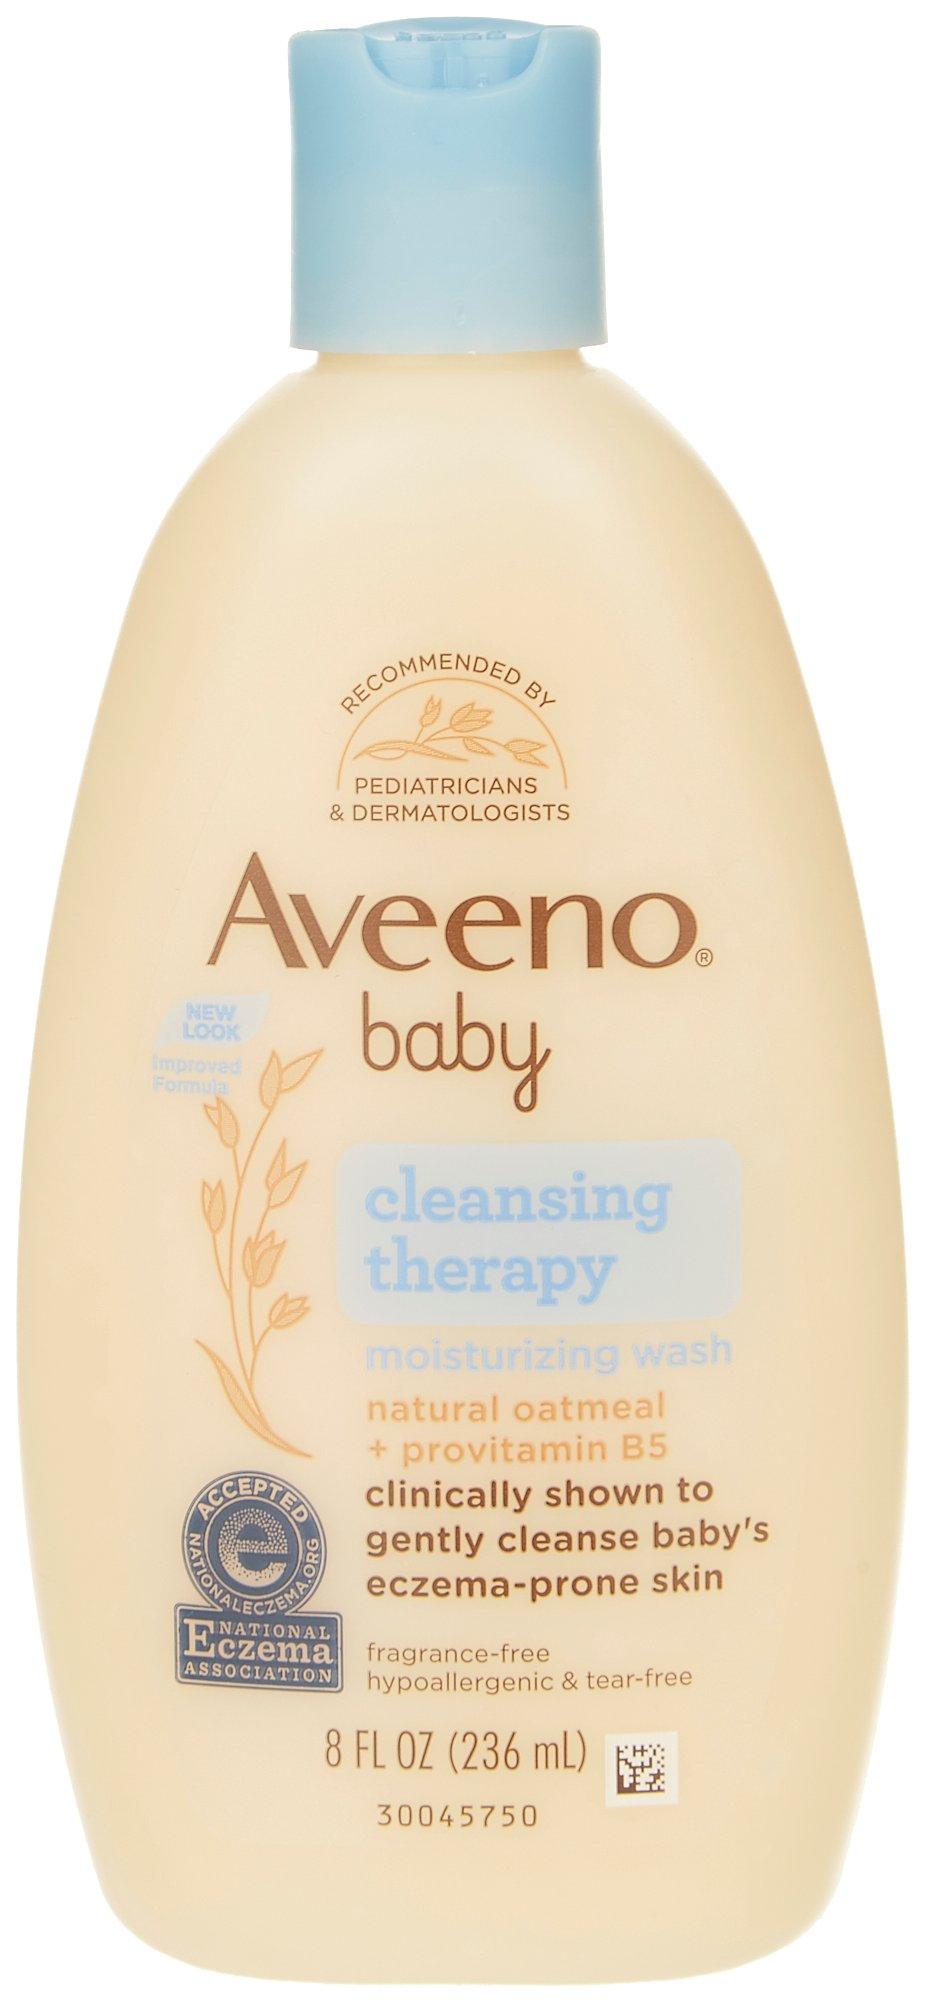 Aveeno 18 Fl.Oz.Cleansing Therapy Eczema Baby Lotion